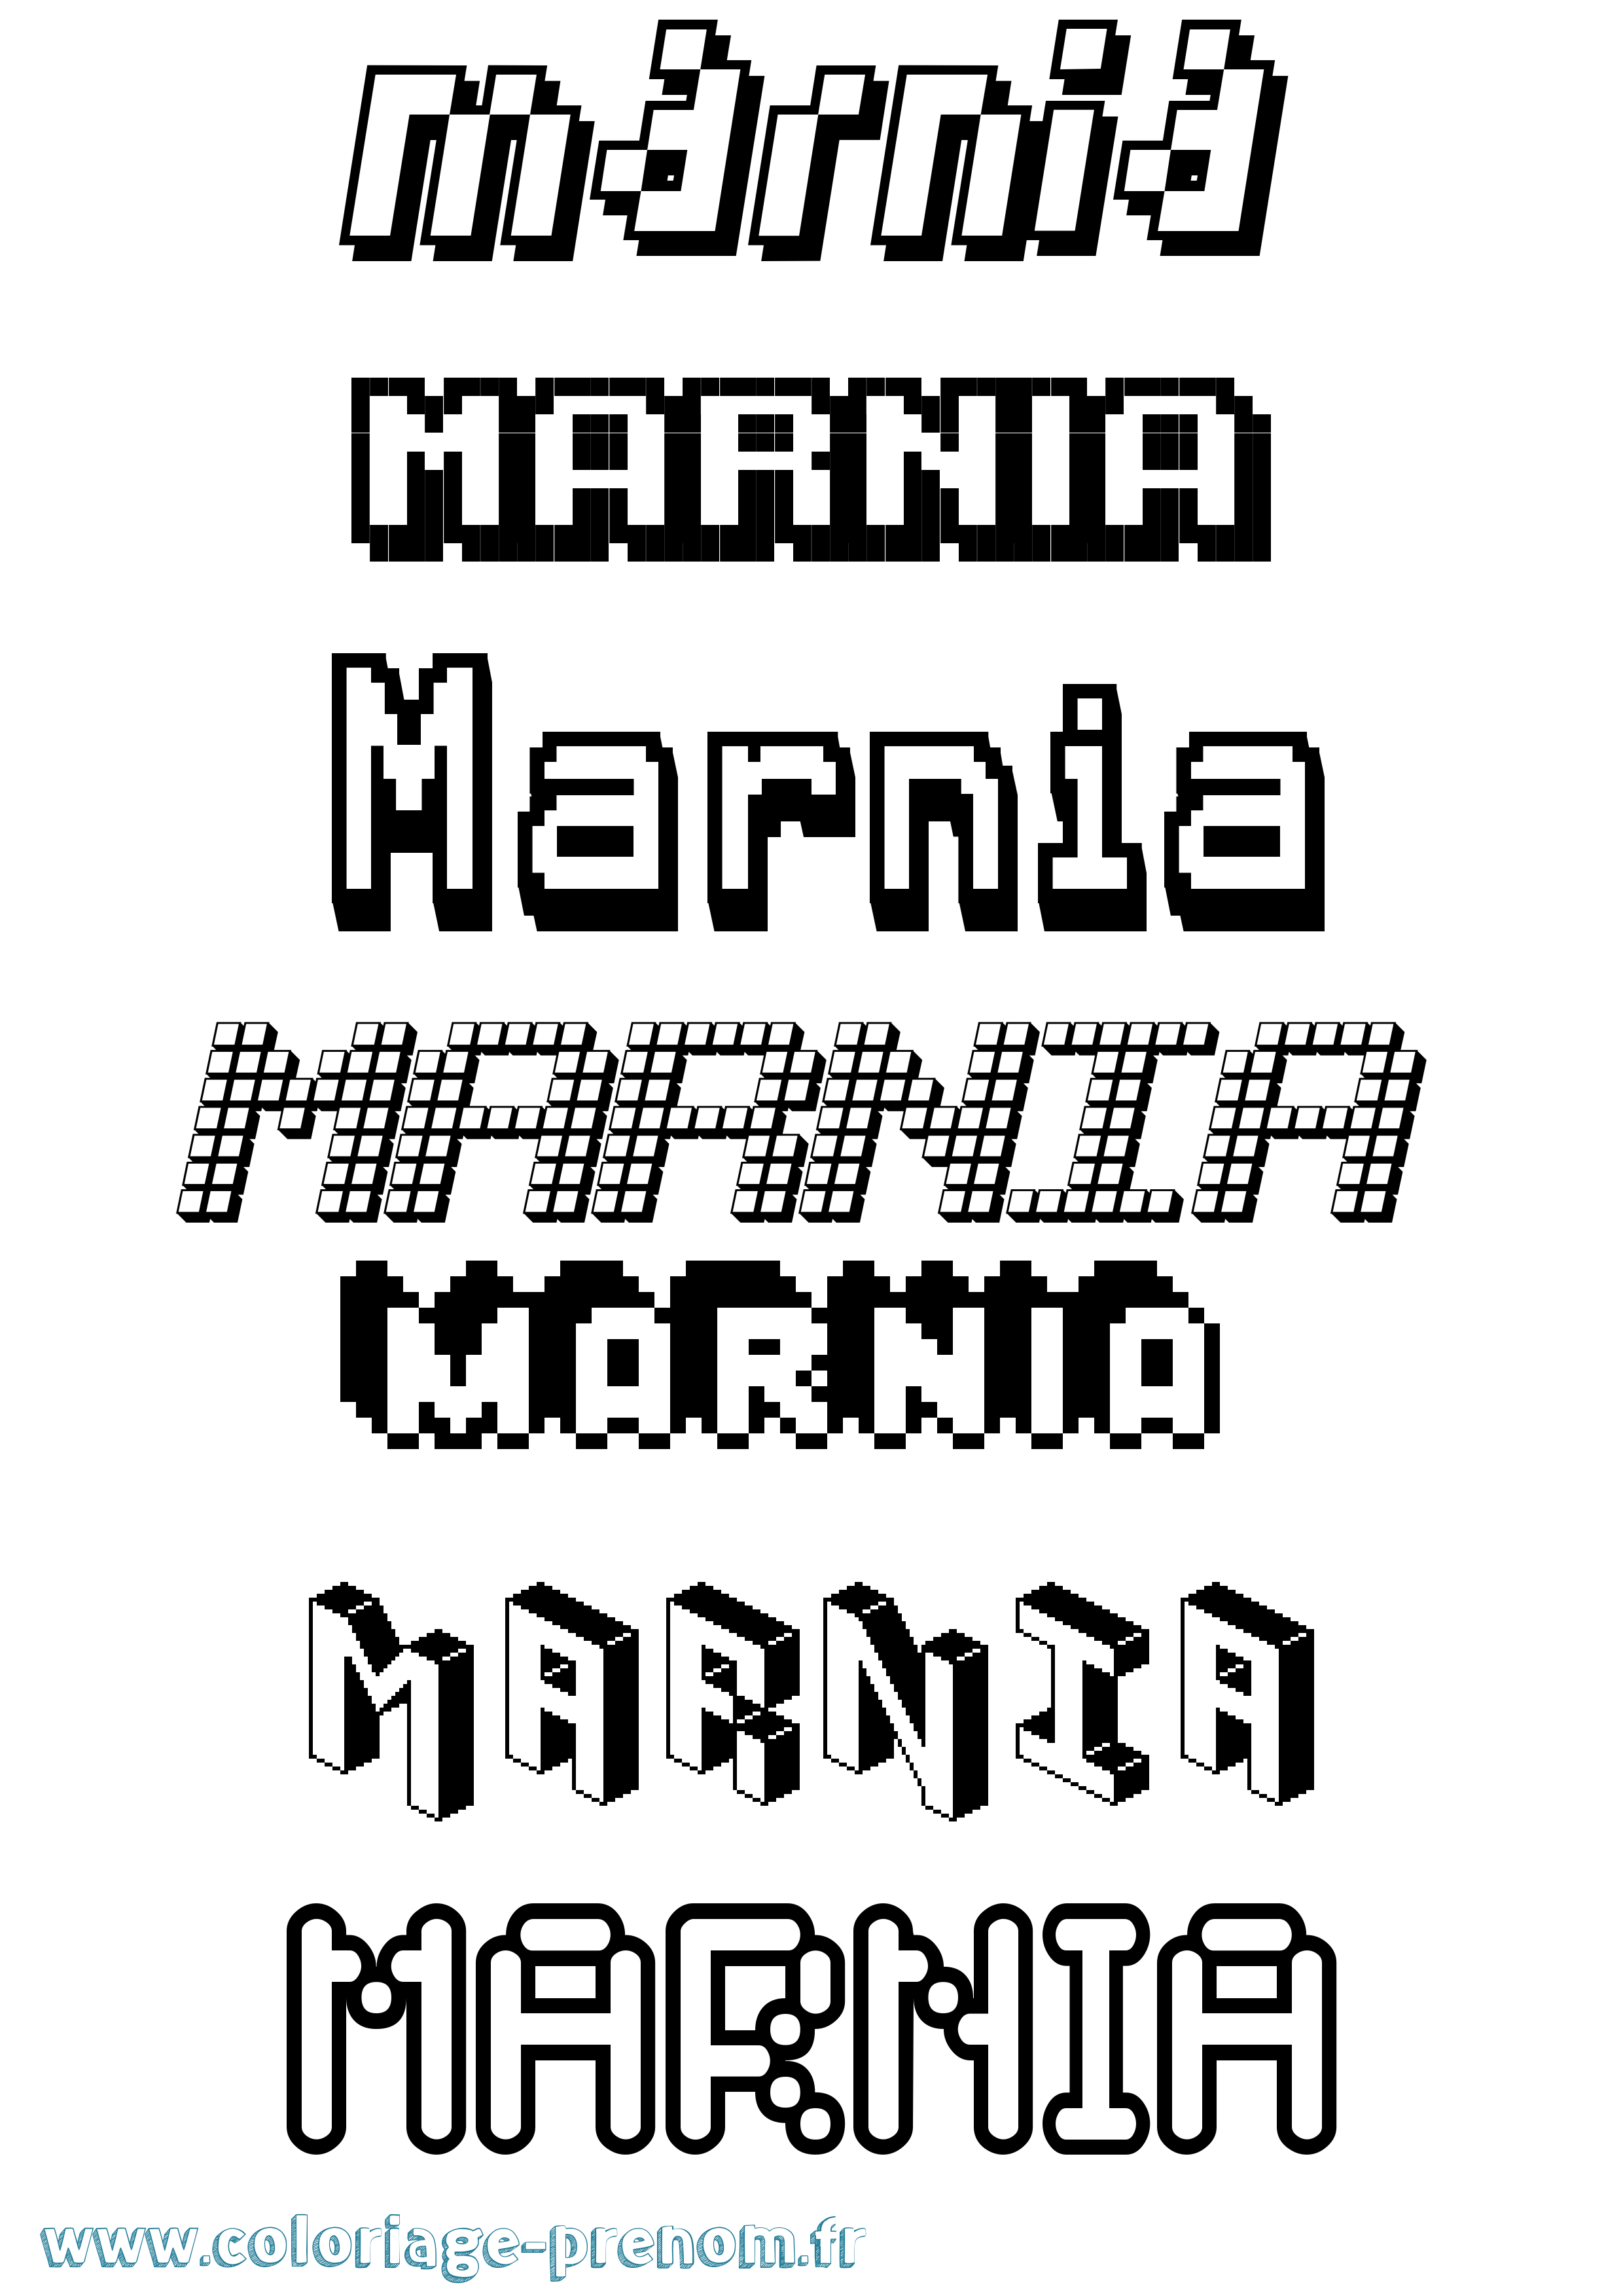 Coloriage prénom Marnia Pixel